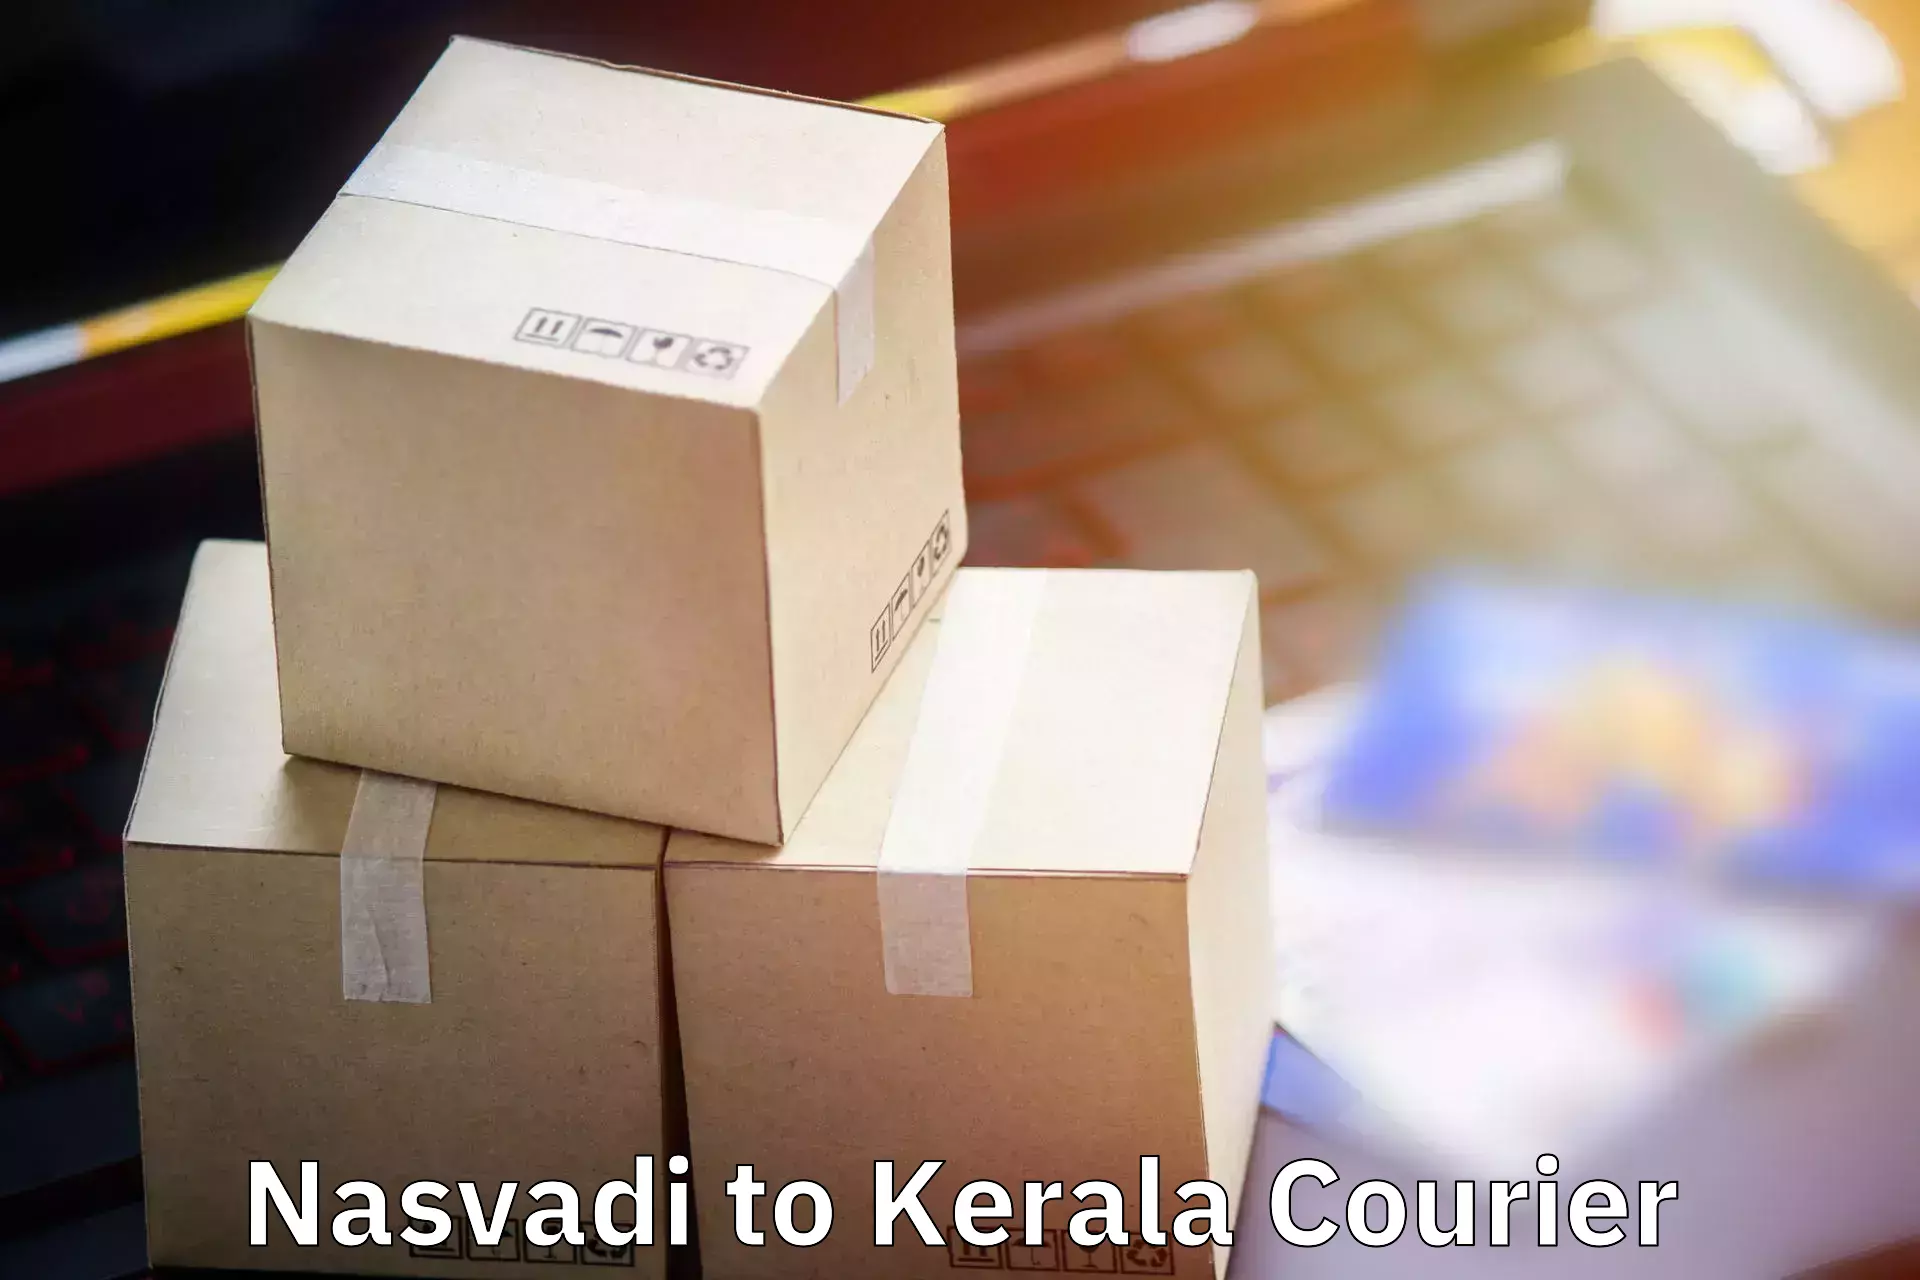 Luggage transport company Nasvadi to Kerala